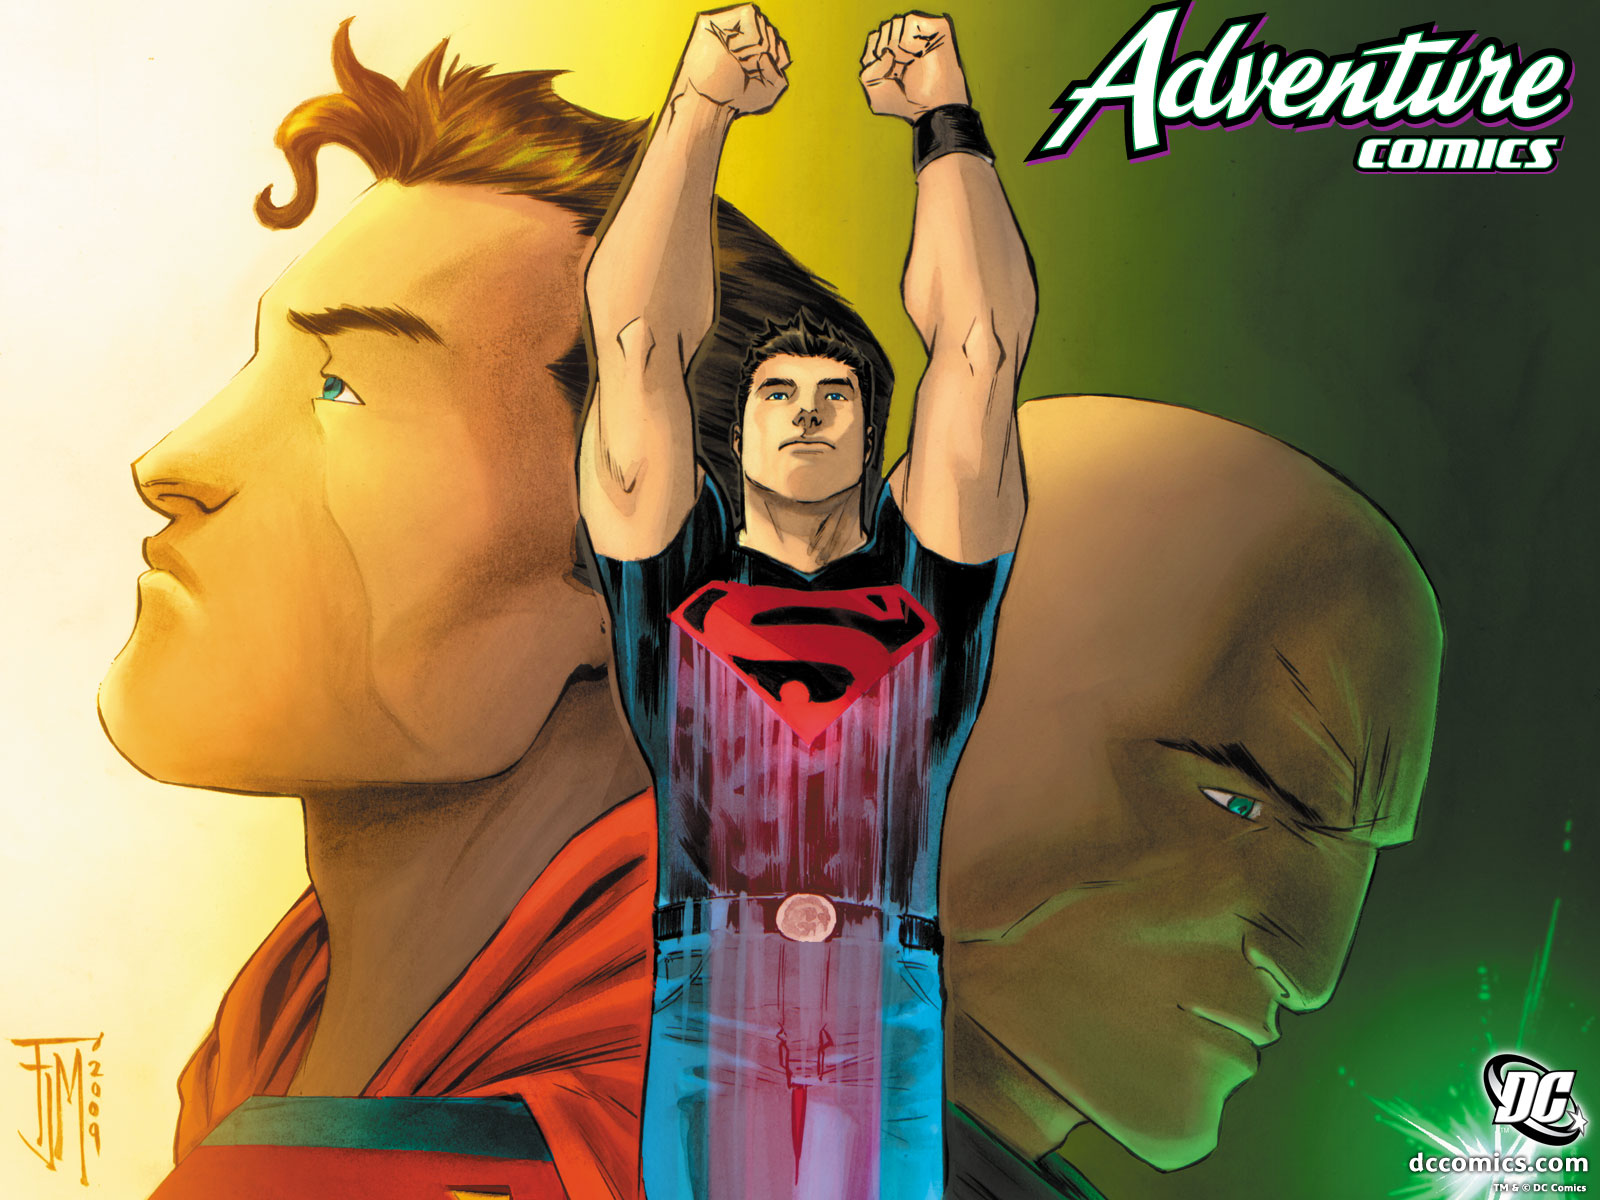 Adventure Comics 1 1600 x 1200